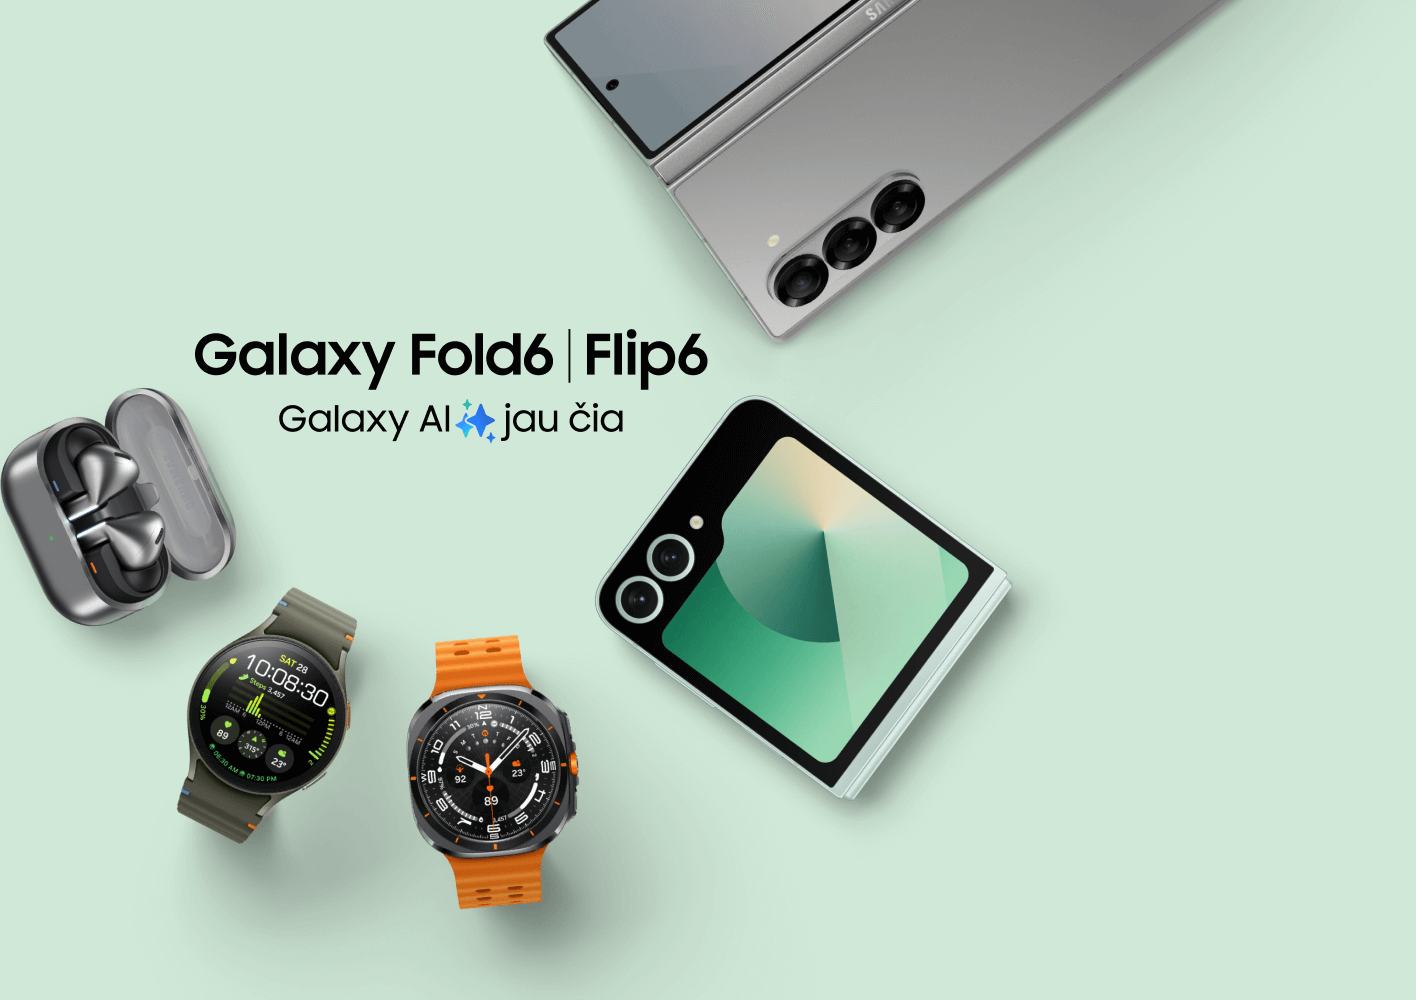 Galaxy Fold6 | Flip6